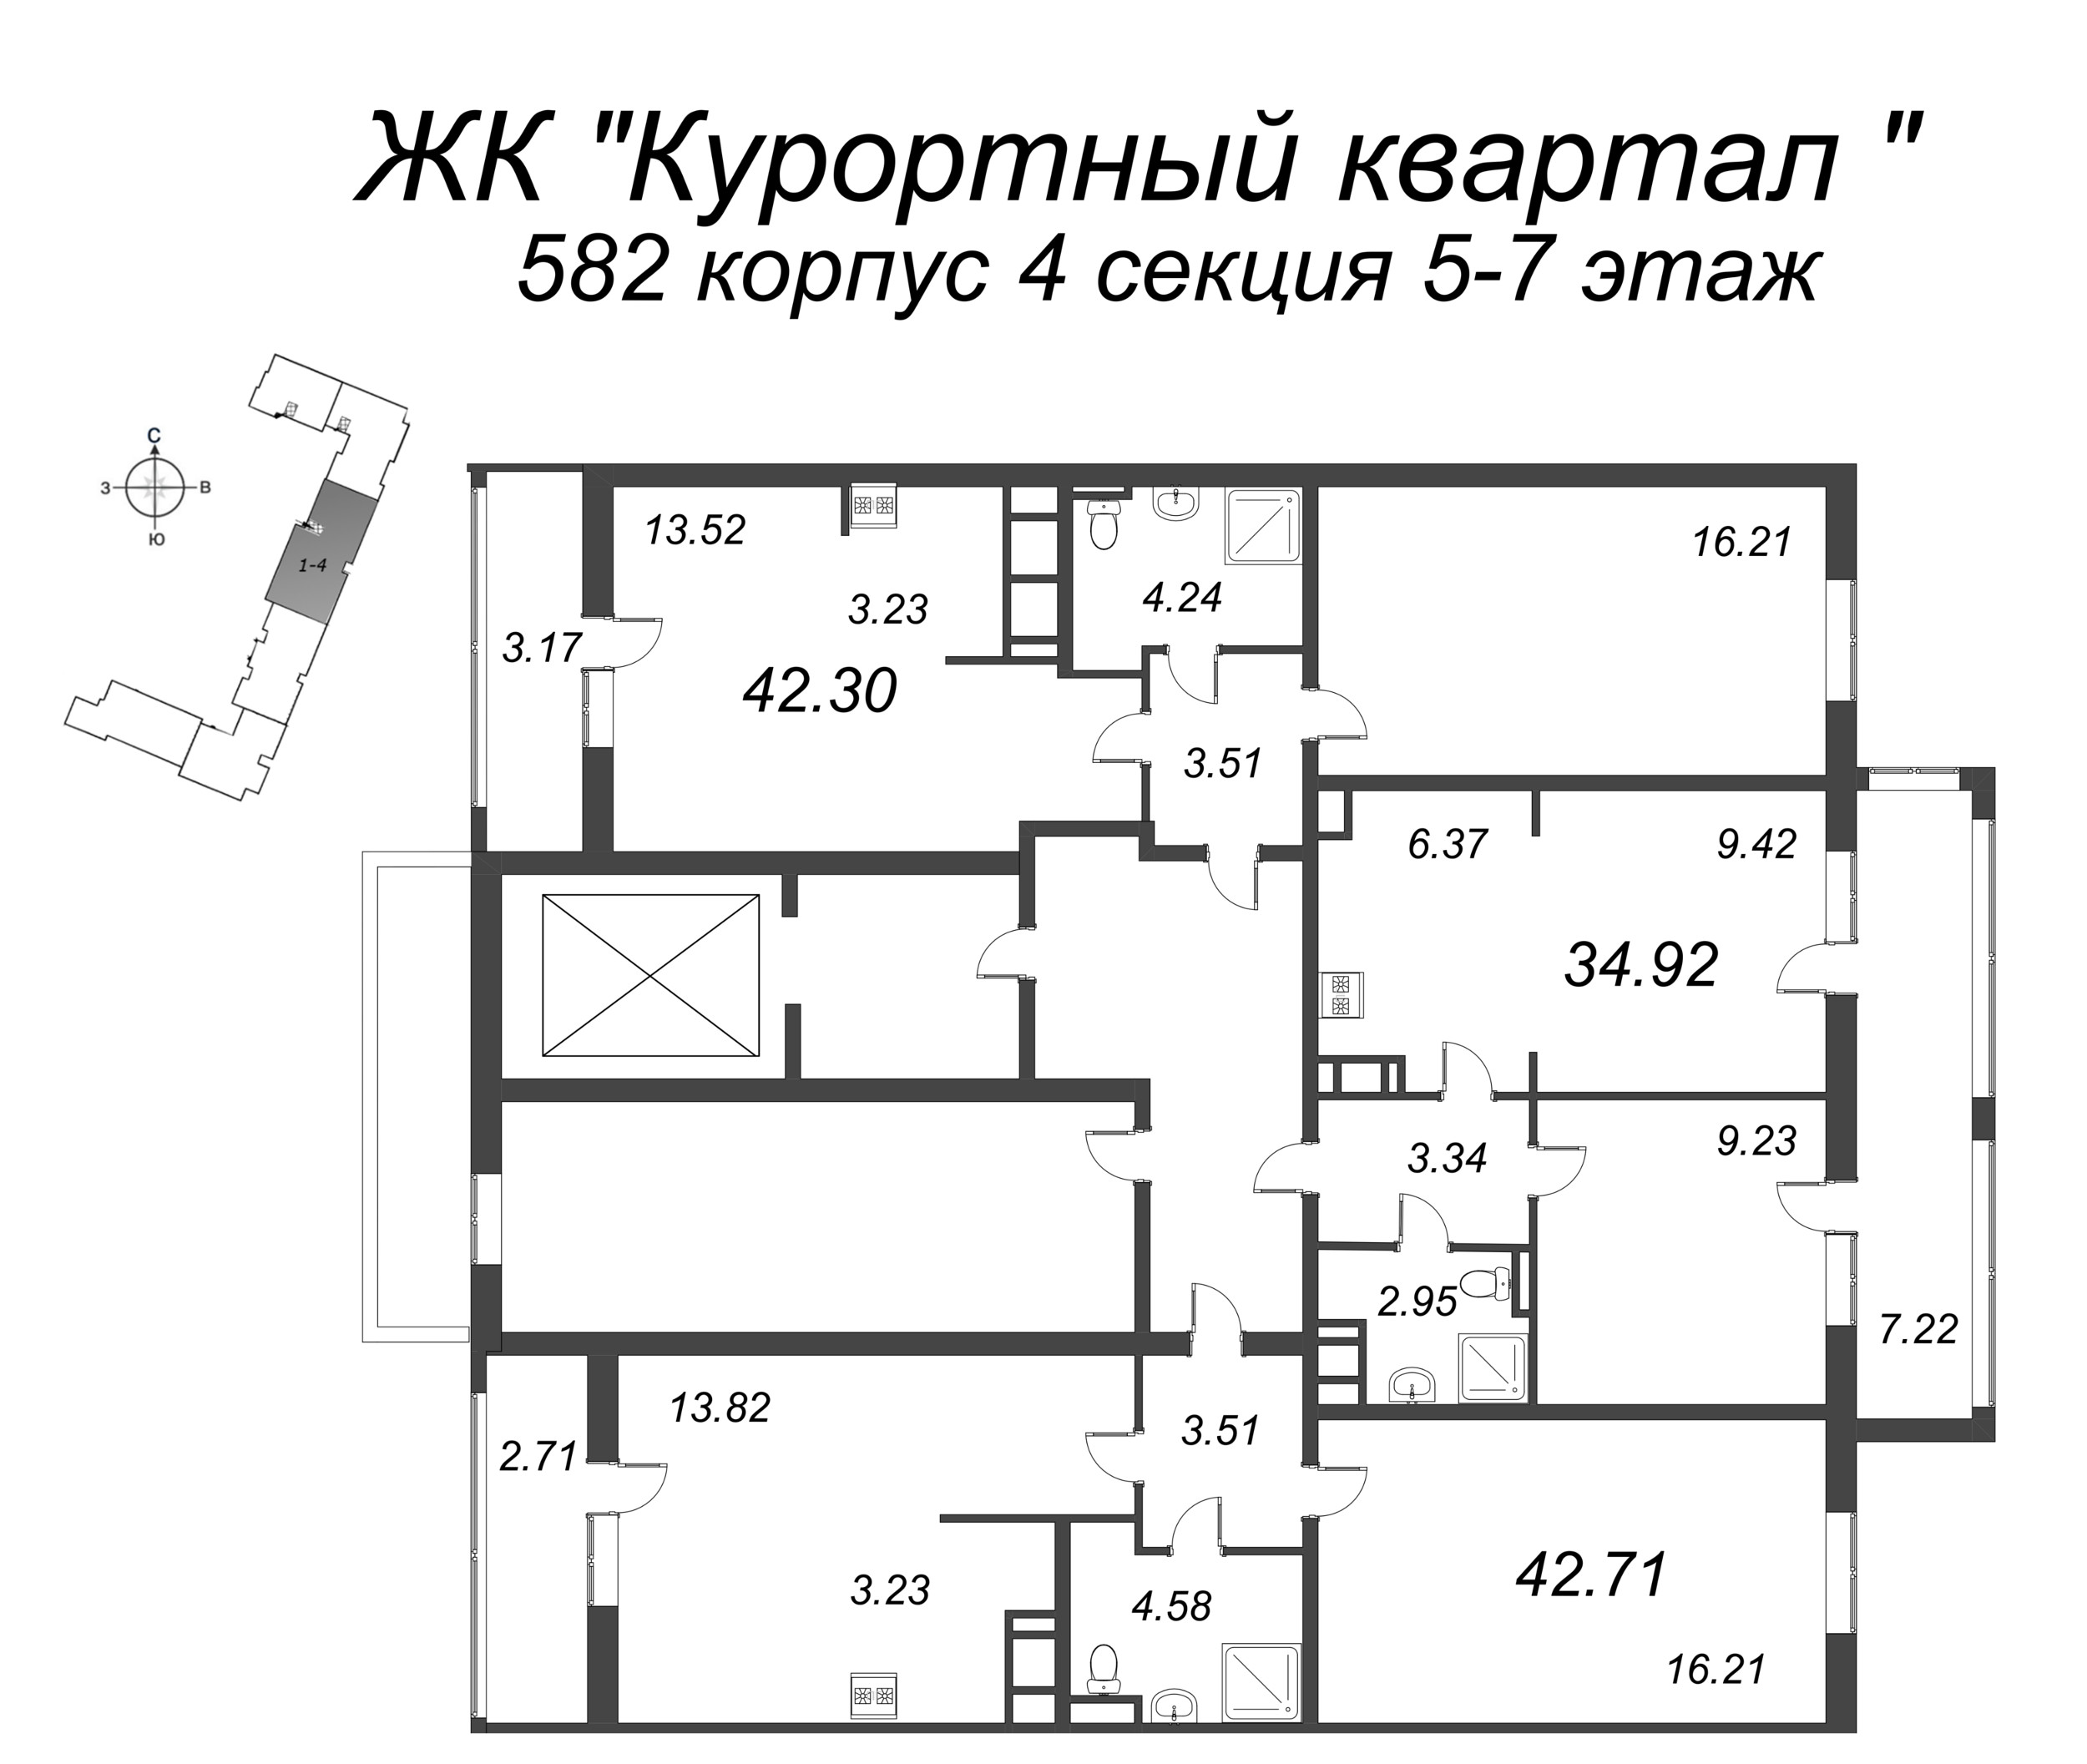 2-комнатная (Евро) квартира, 34.92 м² - планировка этажа